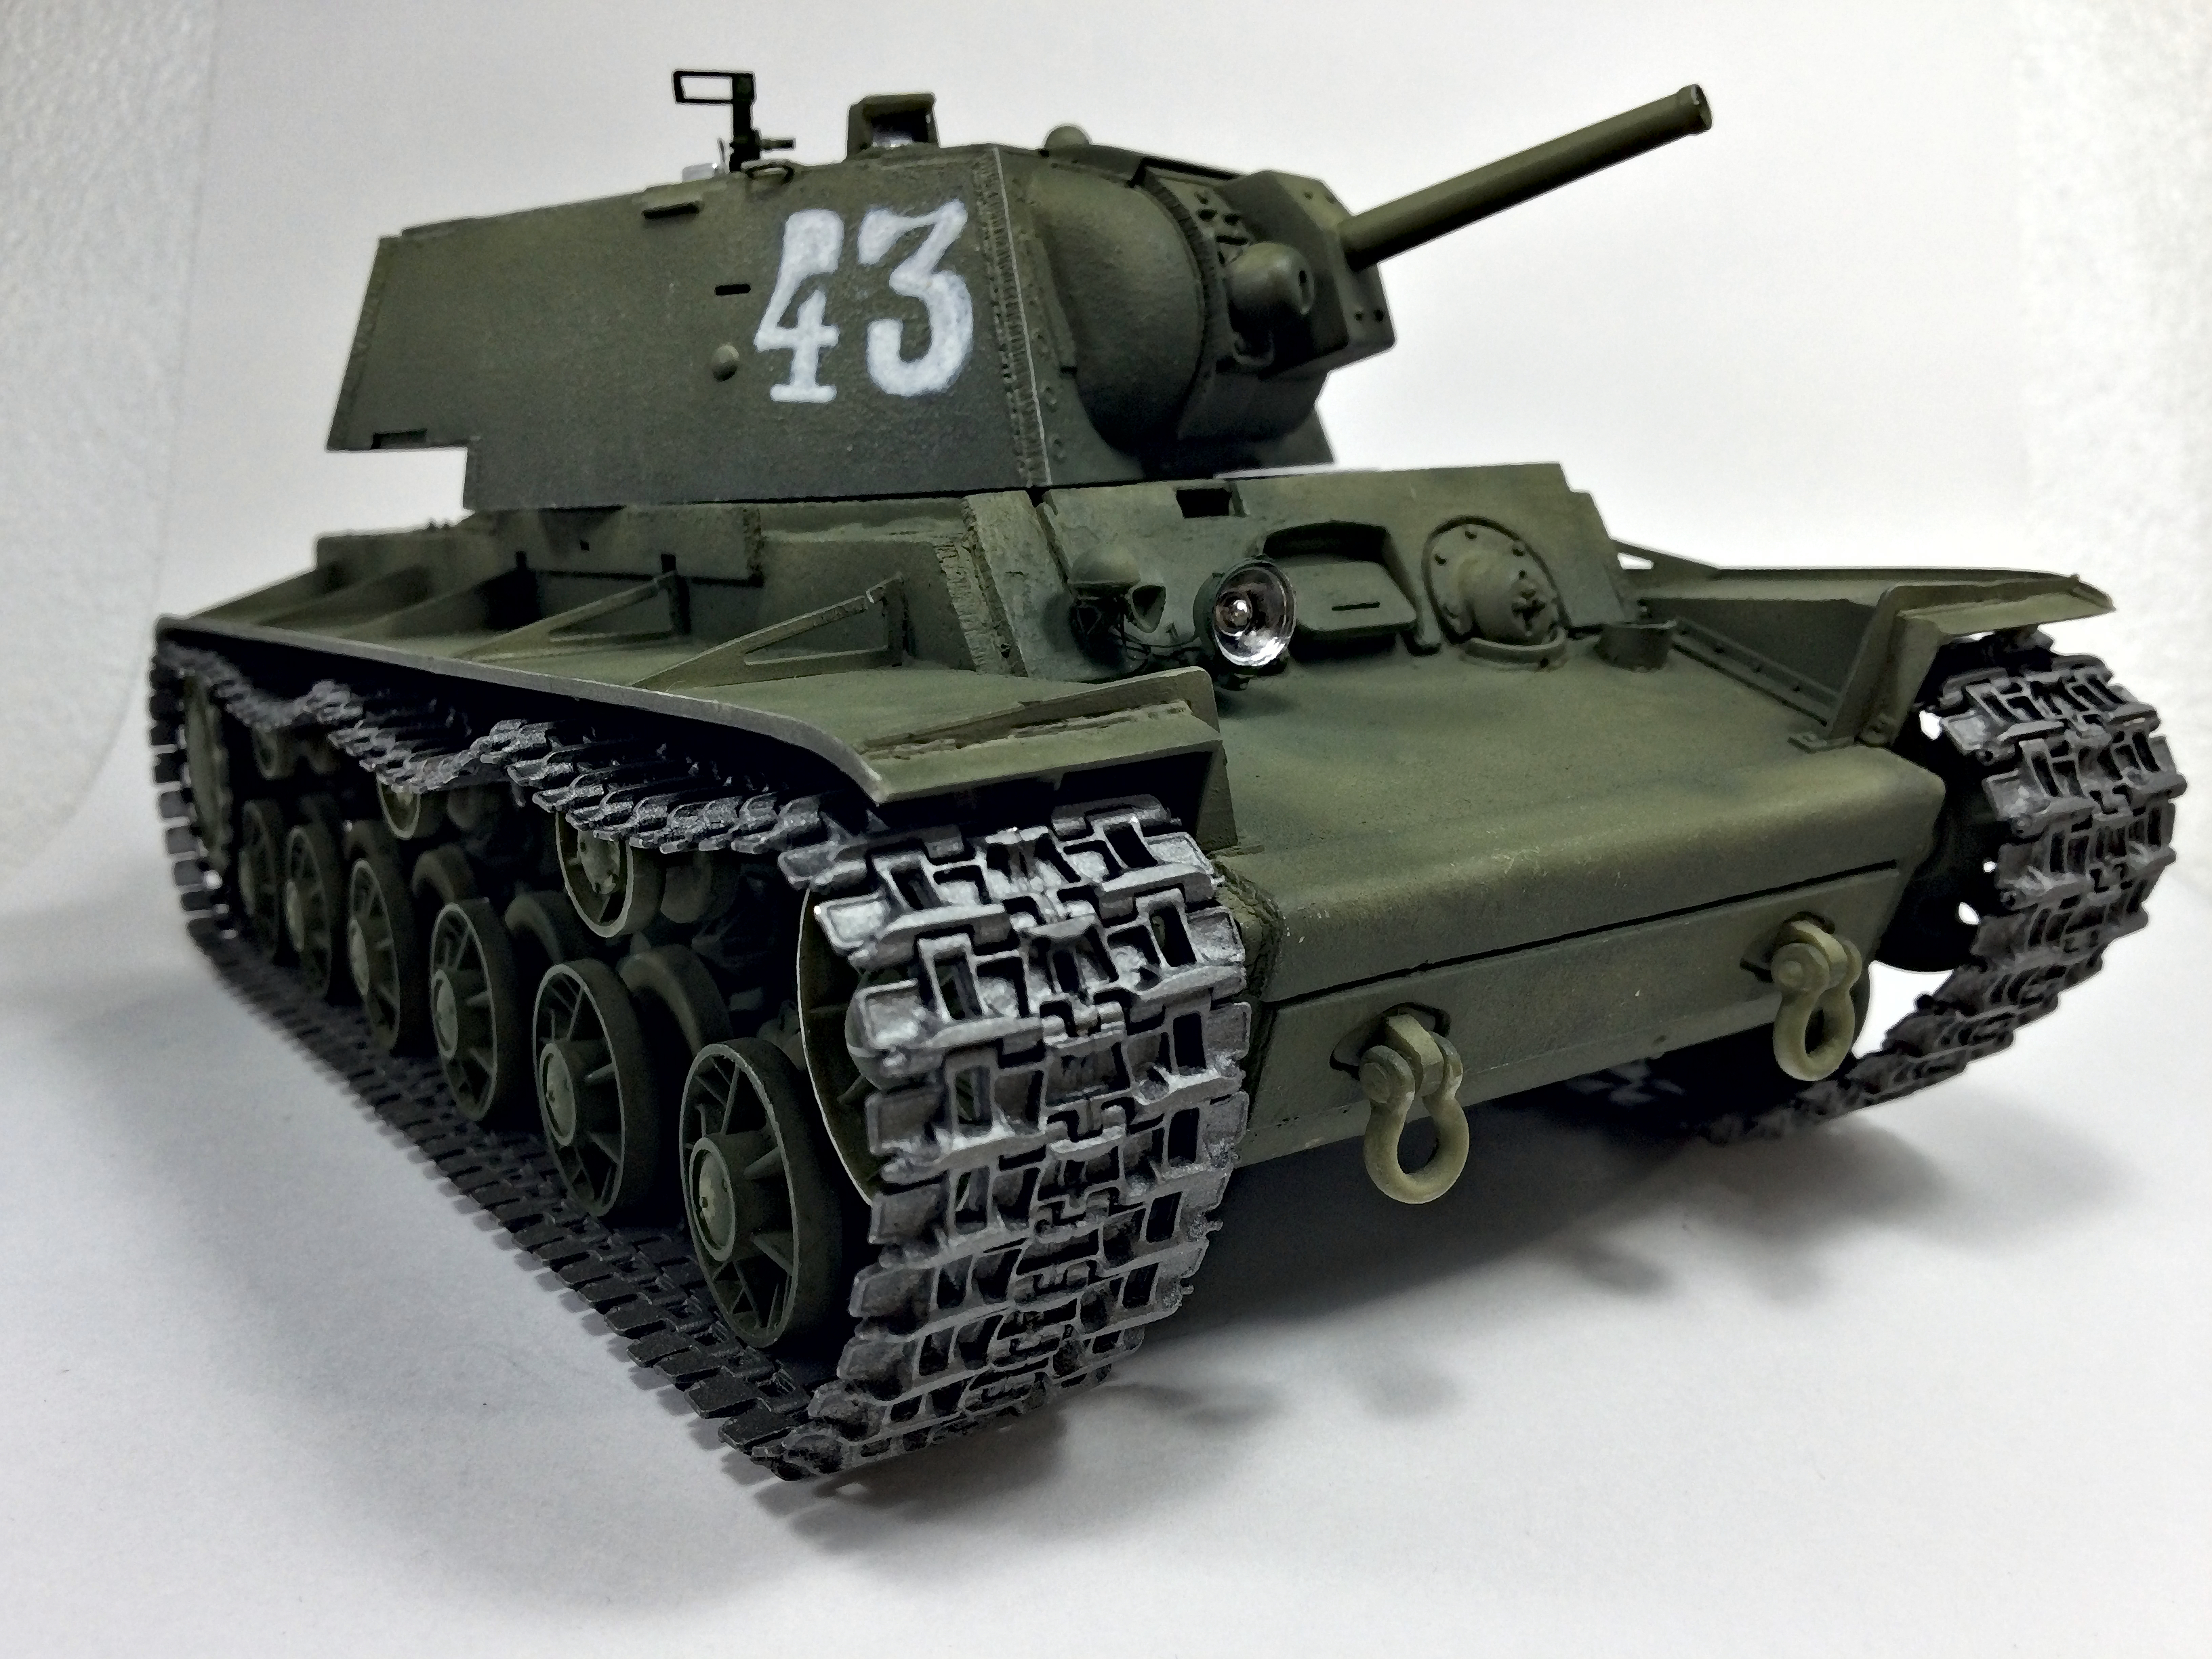 KV-8S Heavy Flamethrower Tank